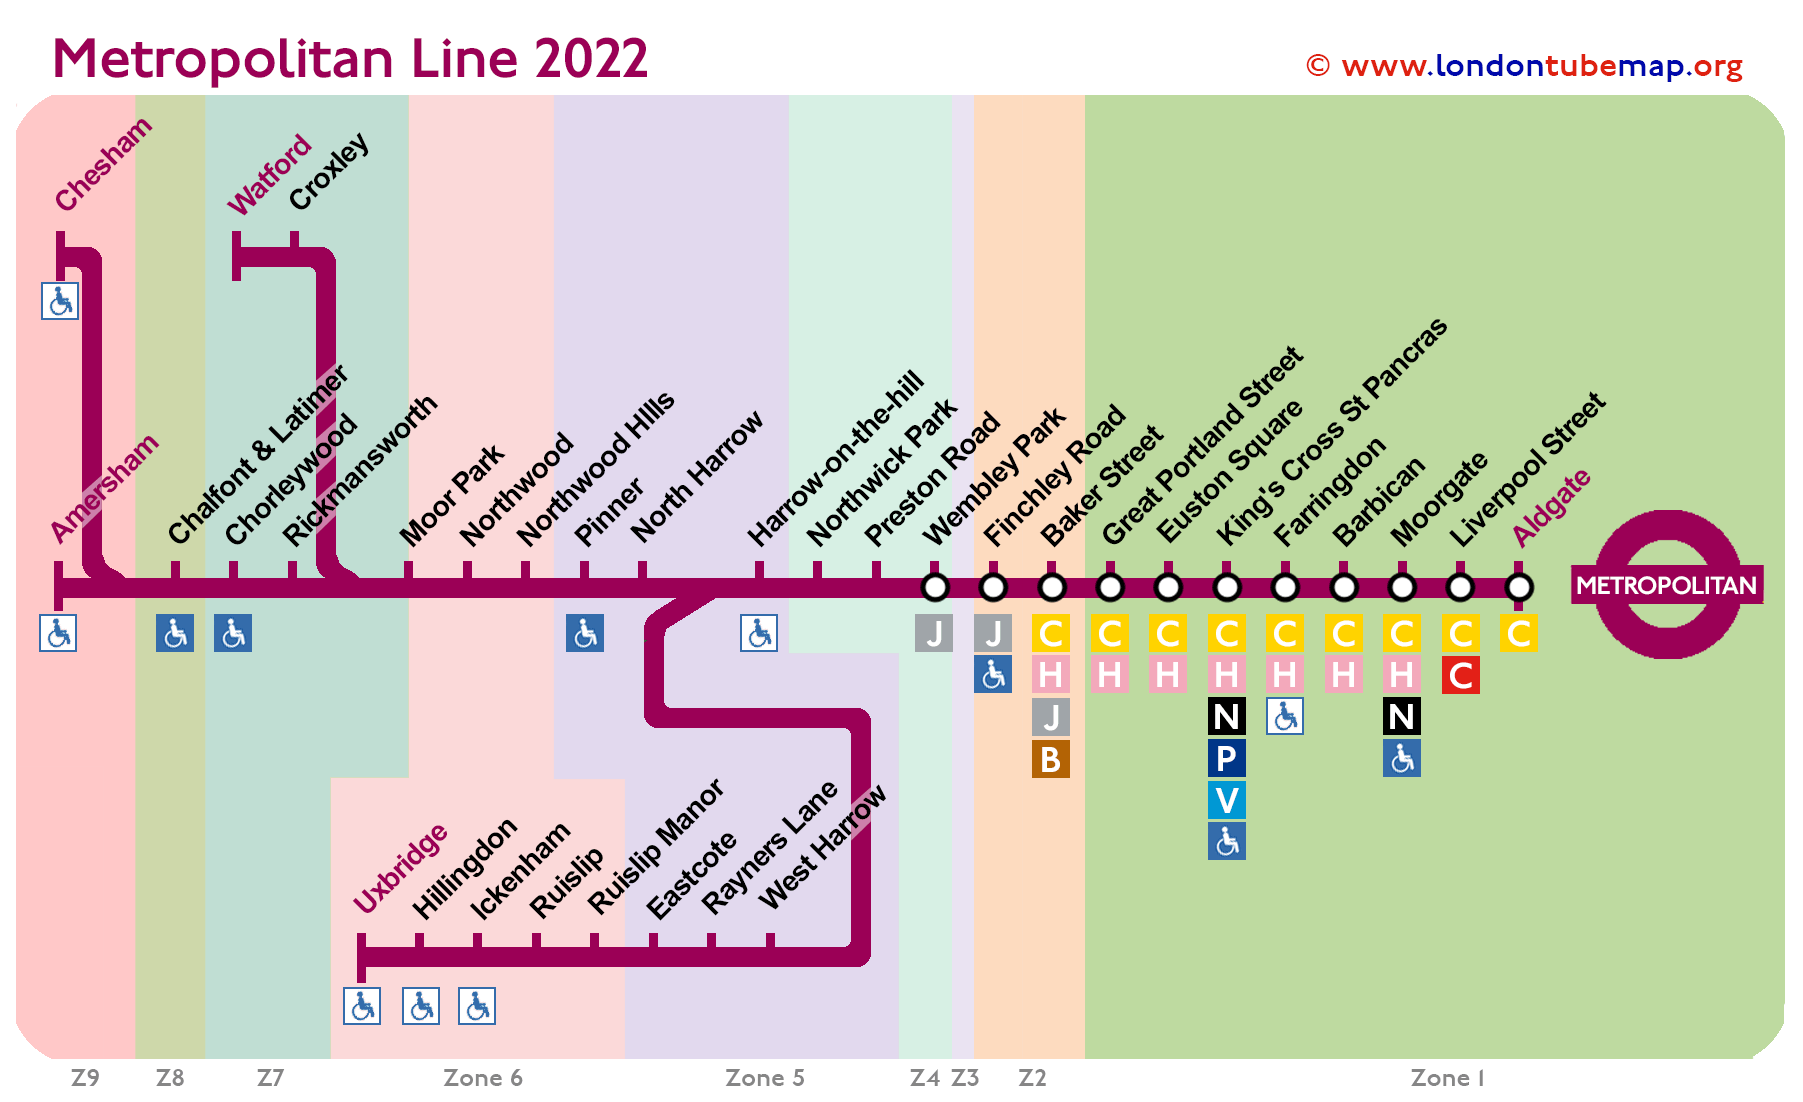 Metropolitan line 2022